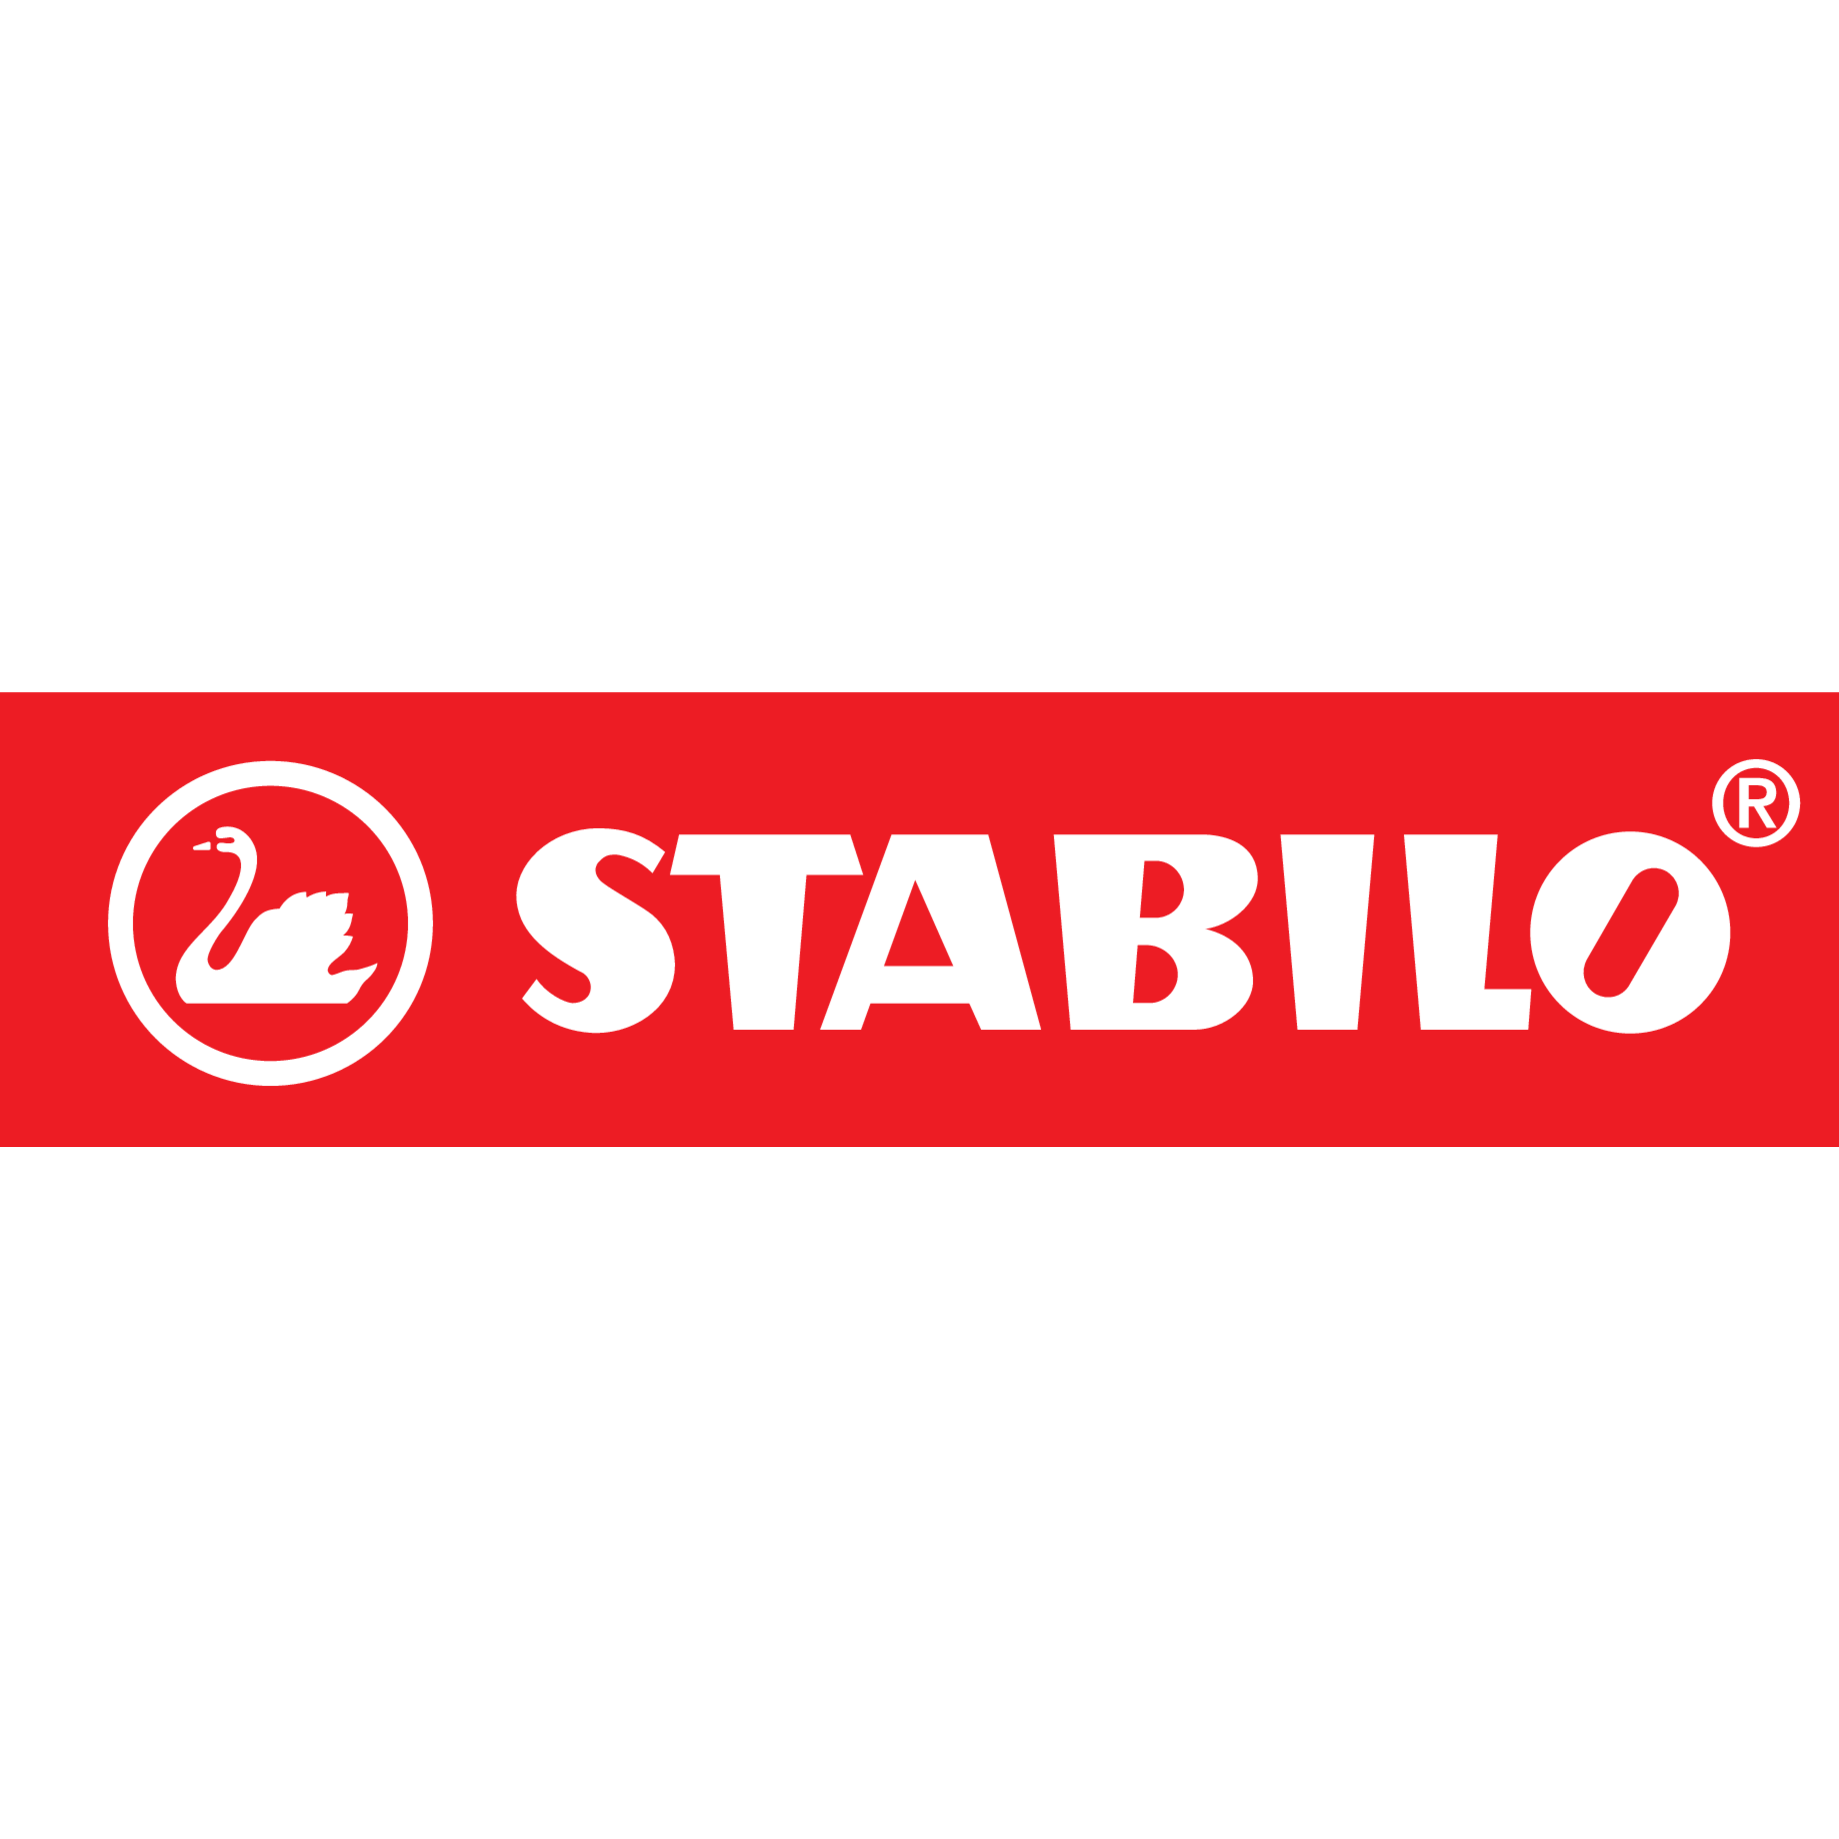 STABILO®